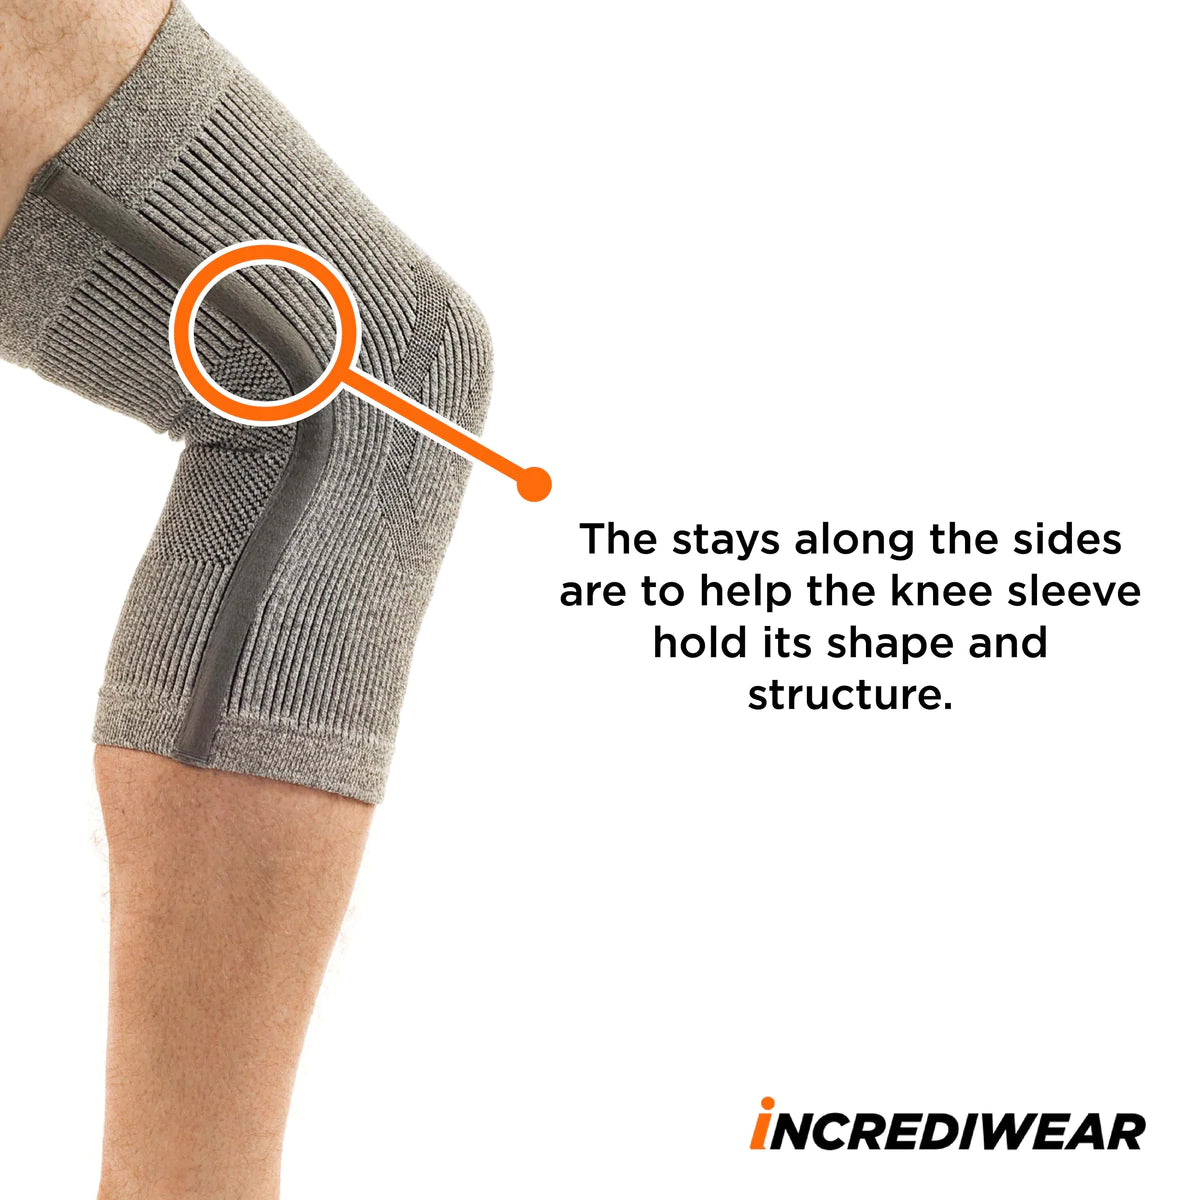 Incrediwear Human Knee Sleeve